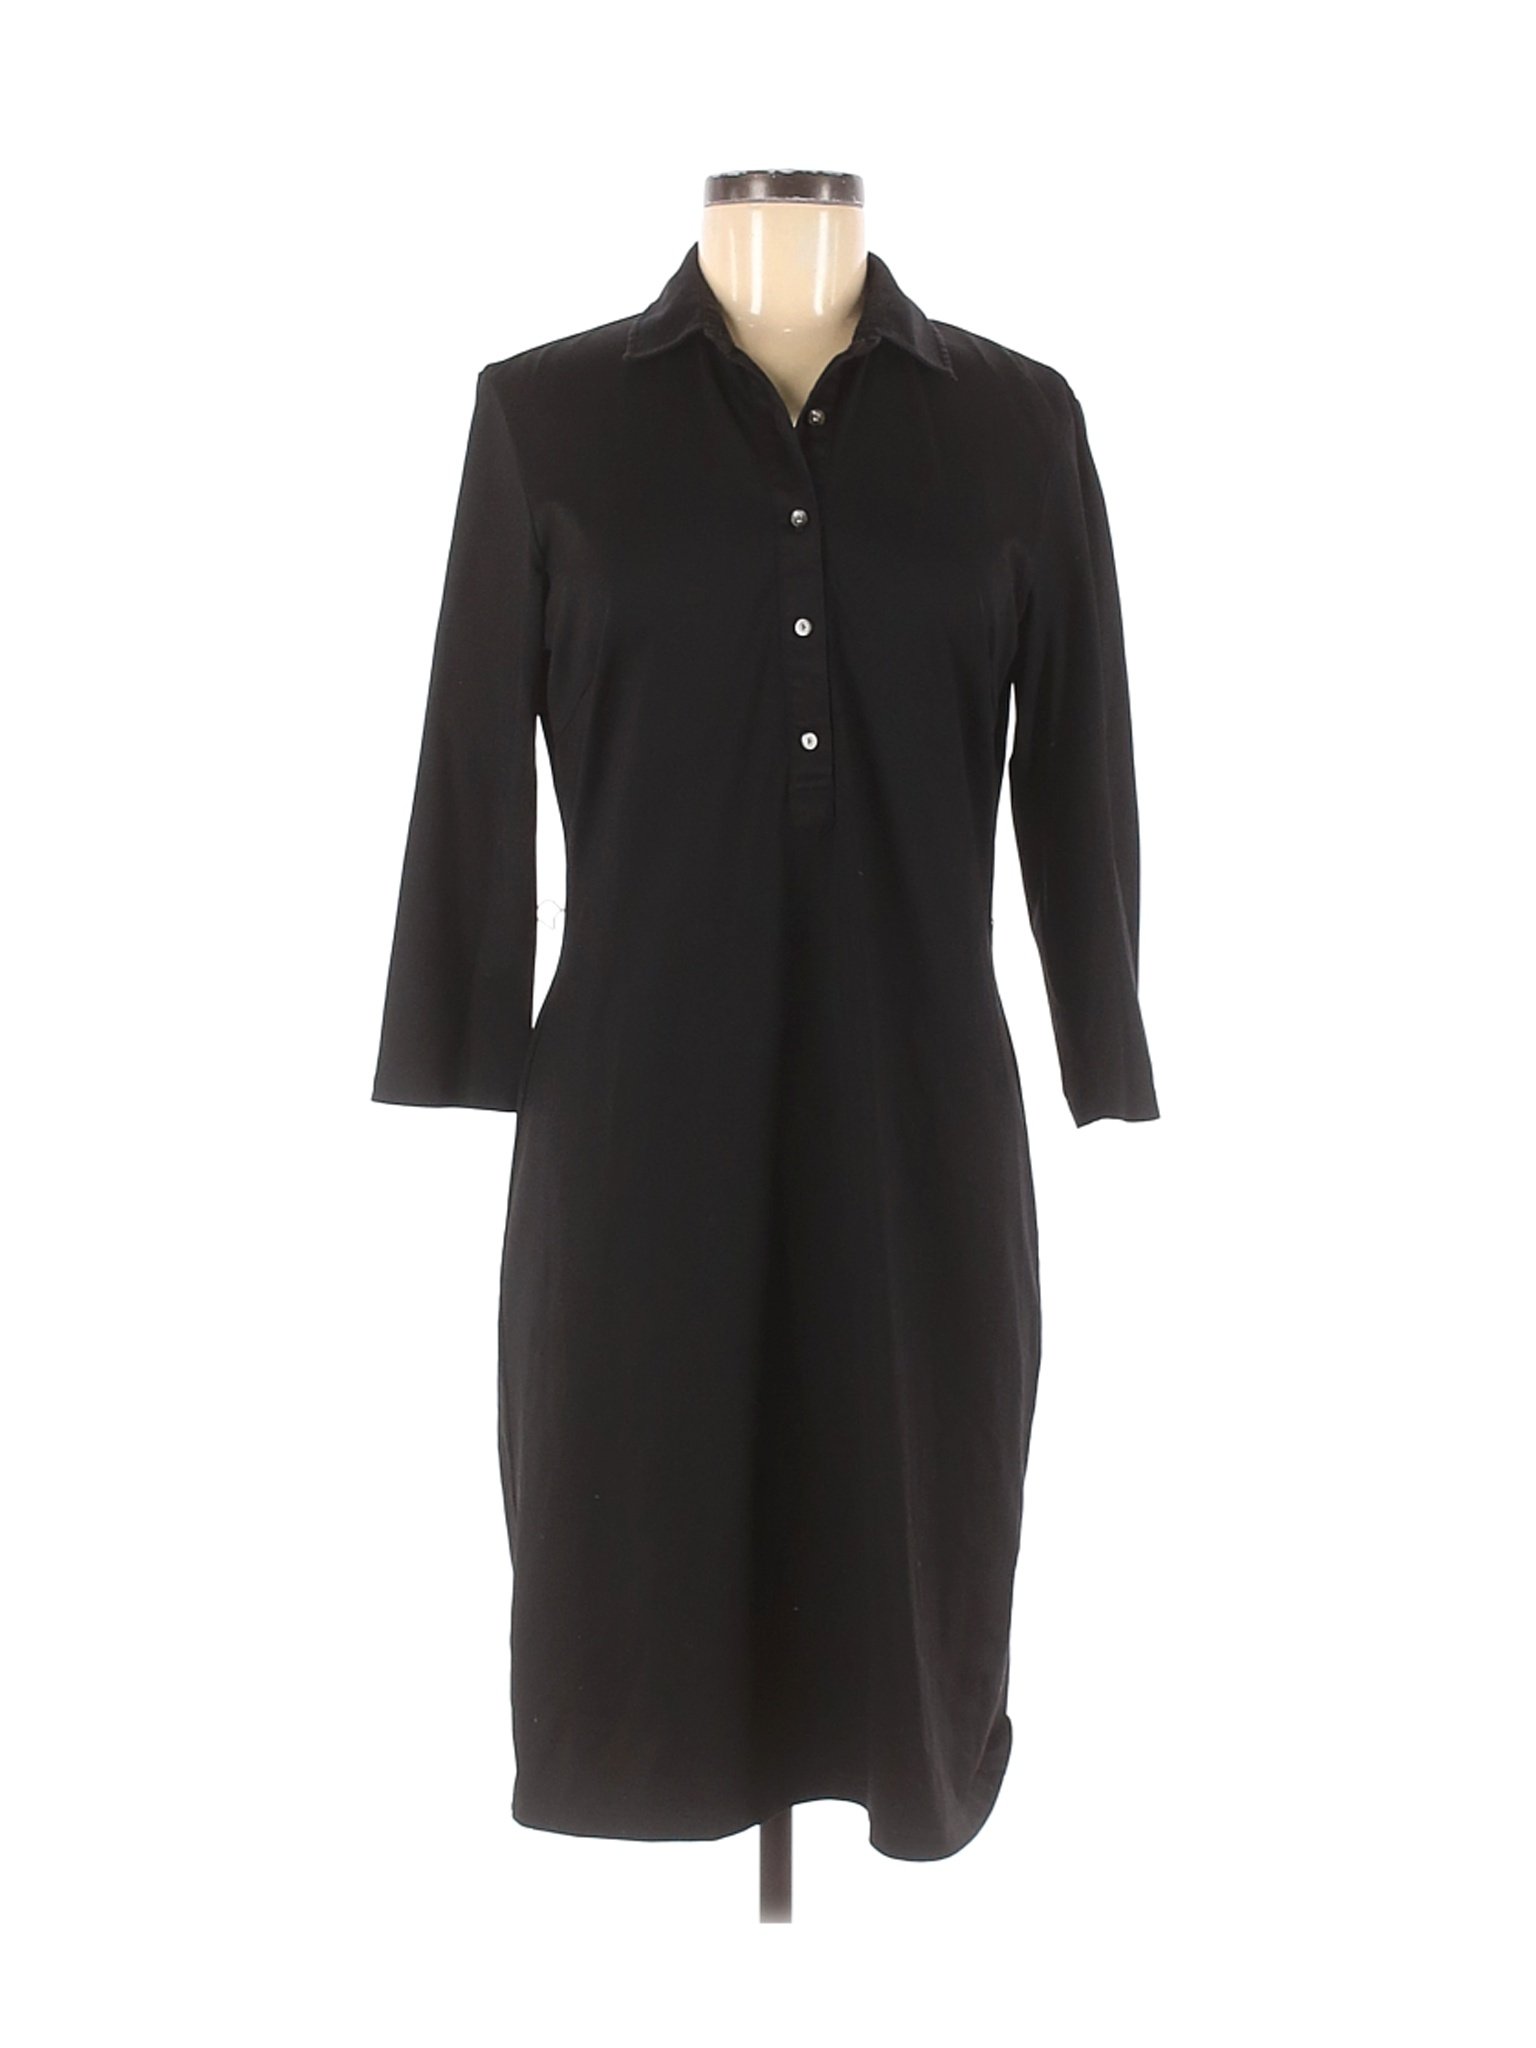 J. McLaughlin Women Black Casual Dress M | eBay